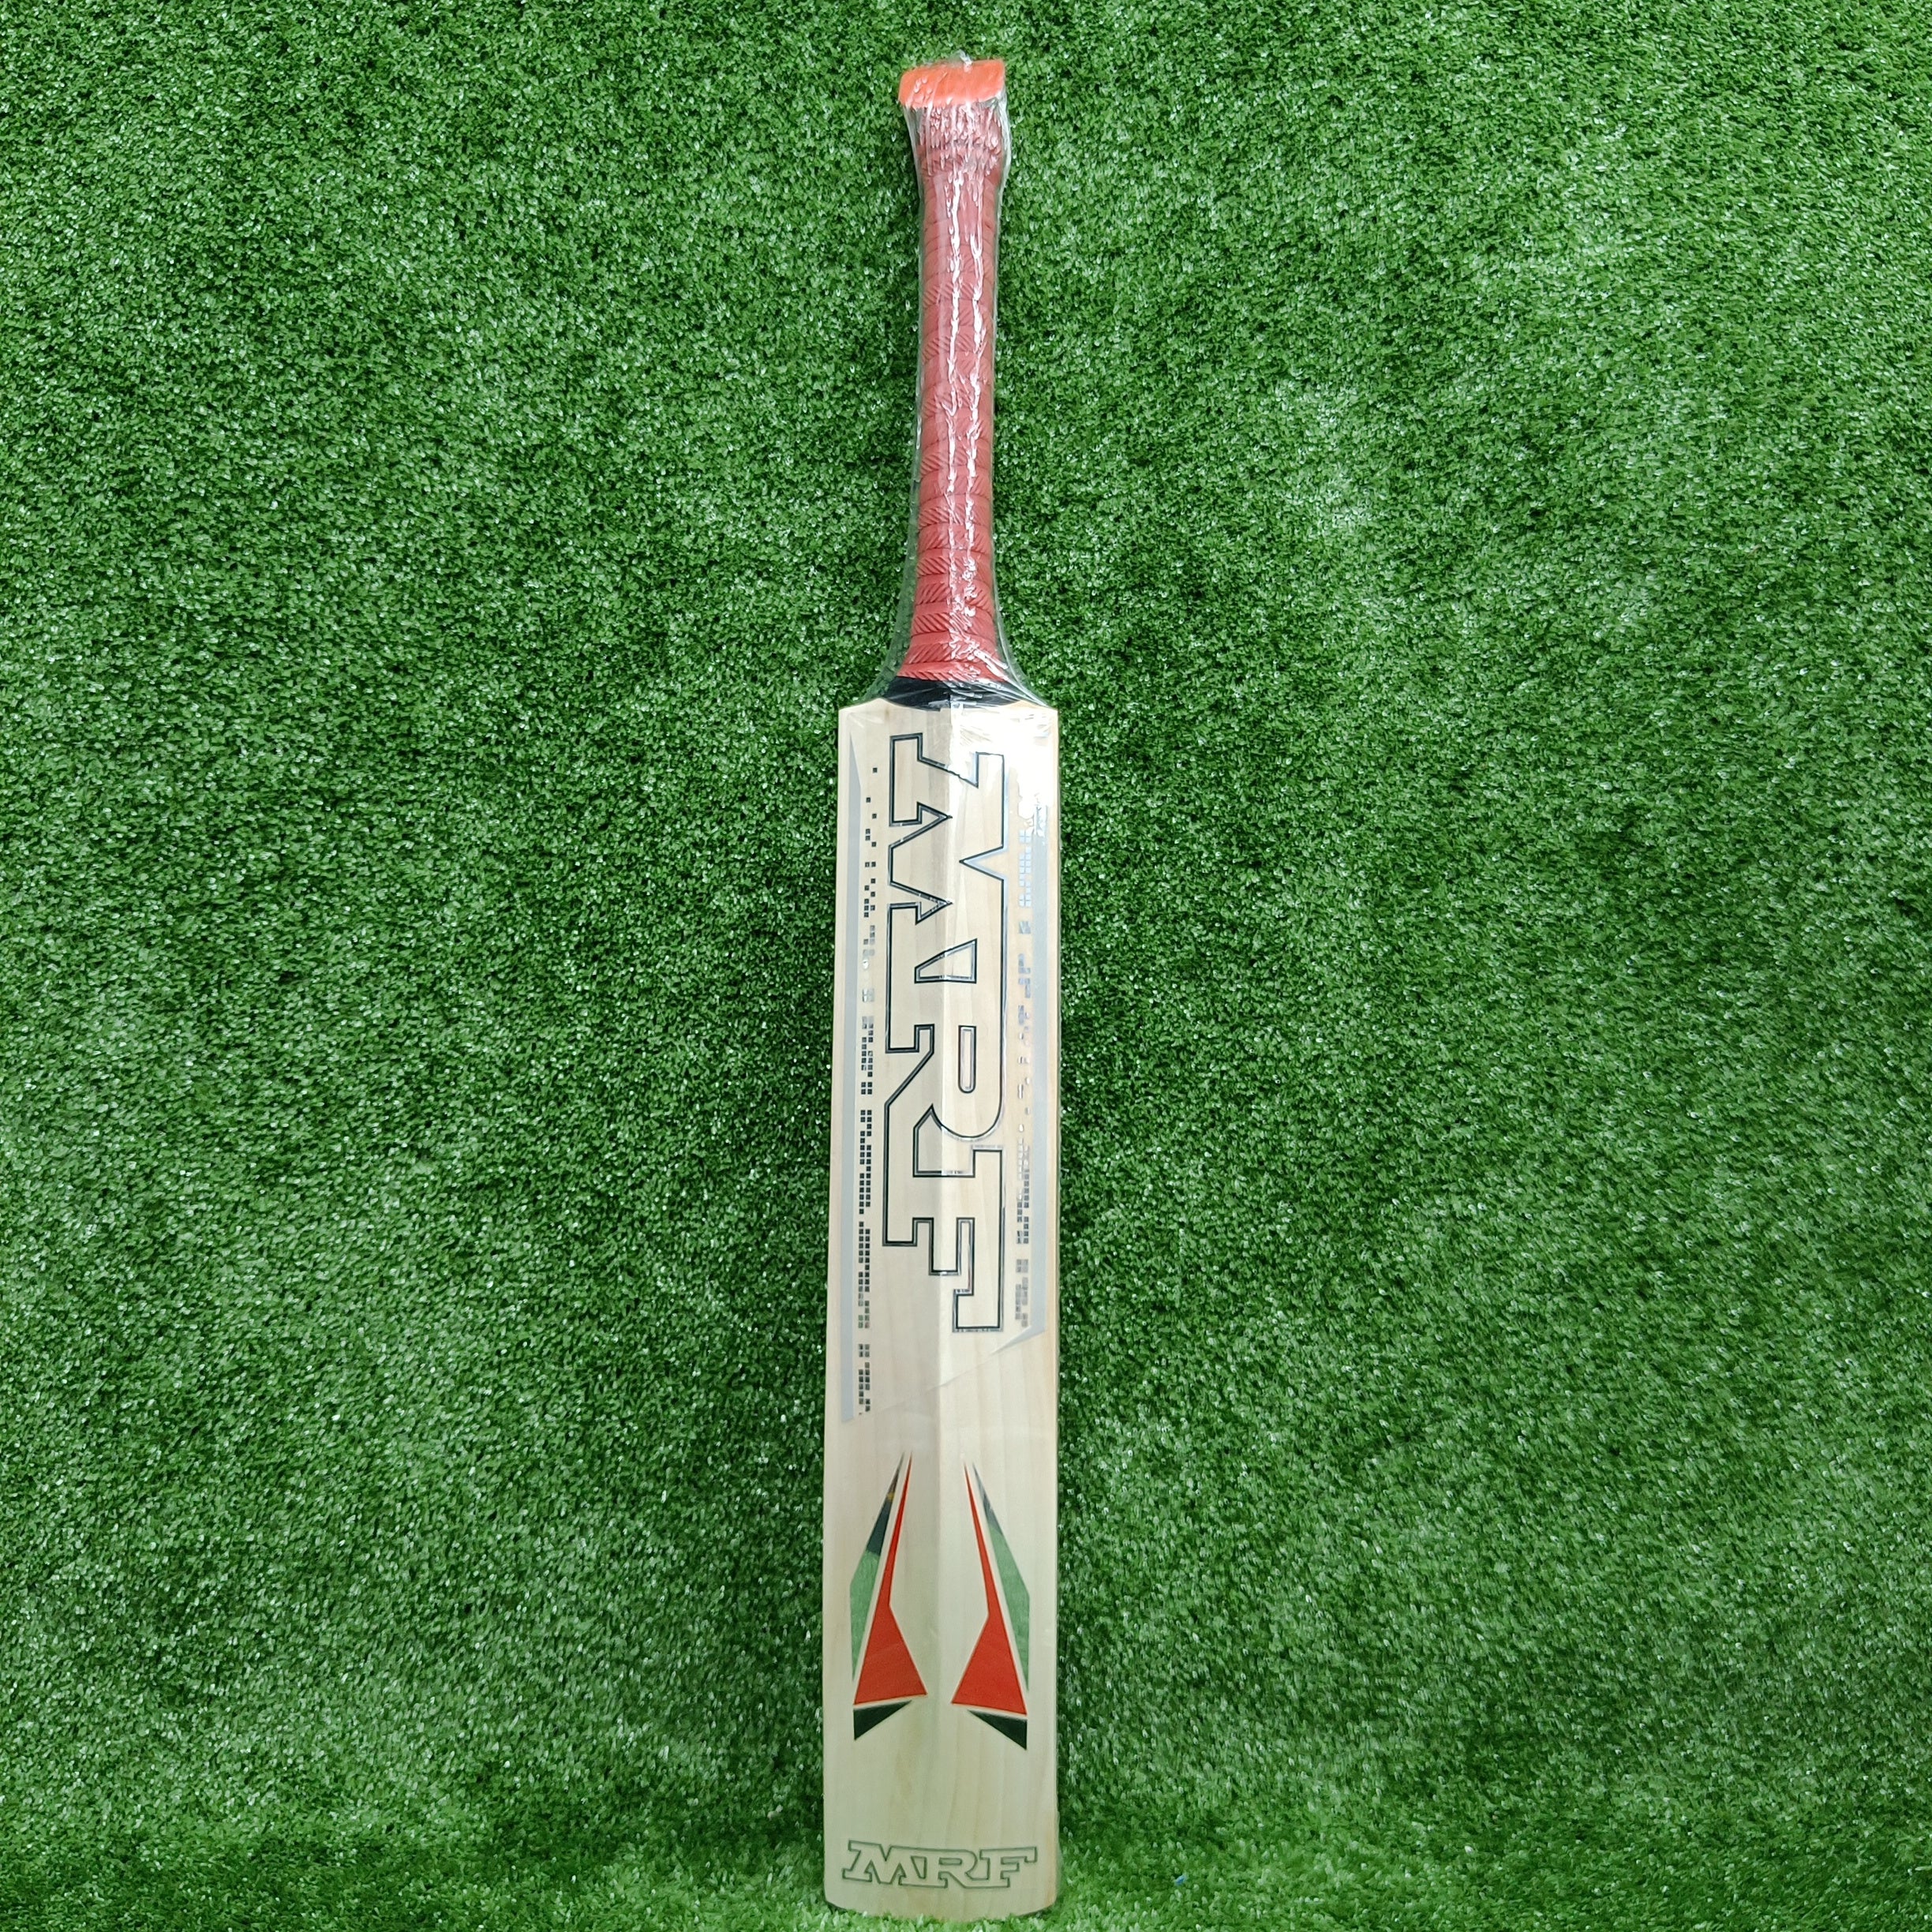 MRF Warrior Hero Cricket Bat